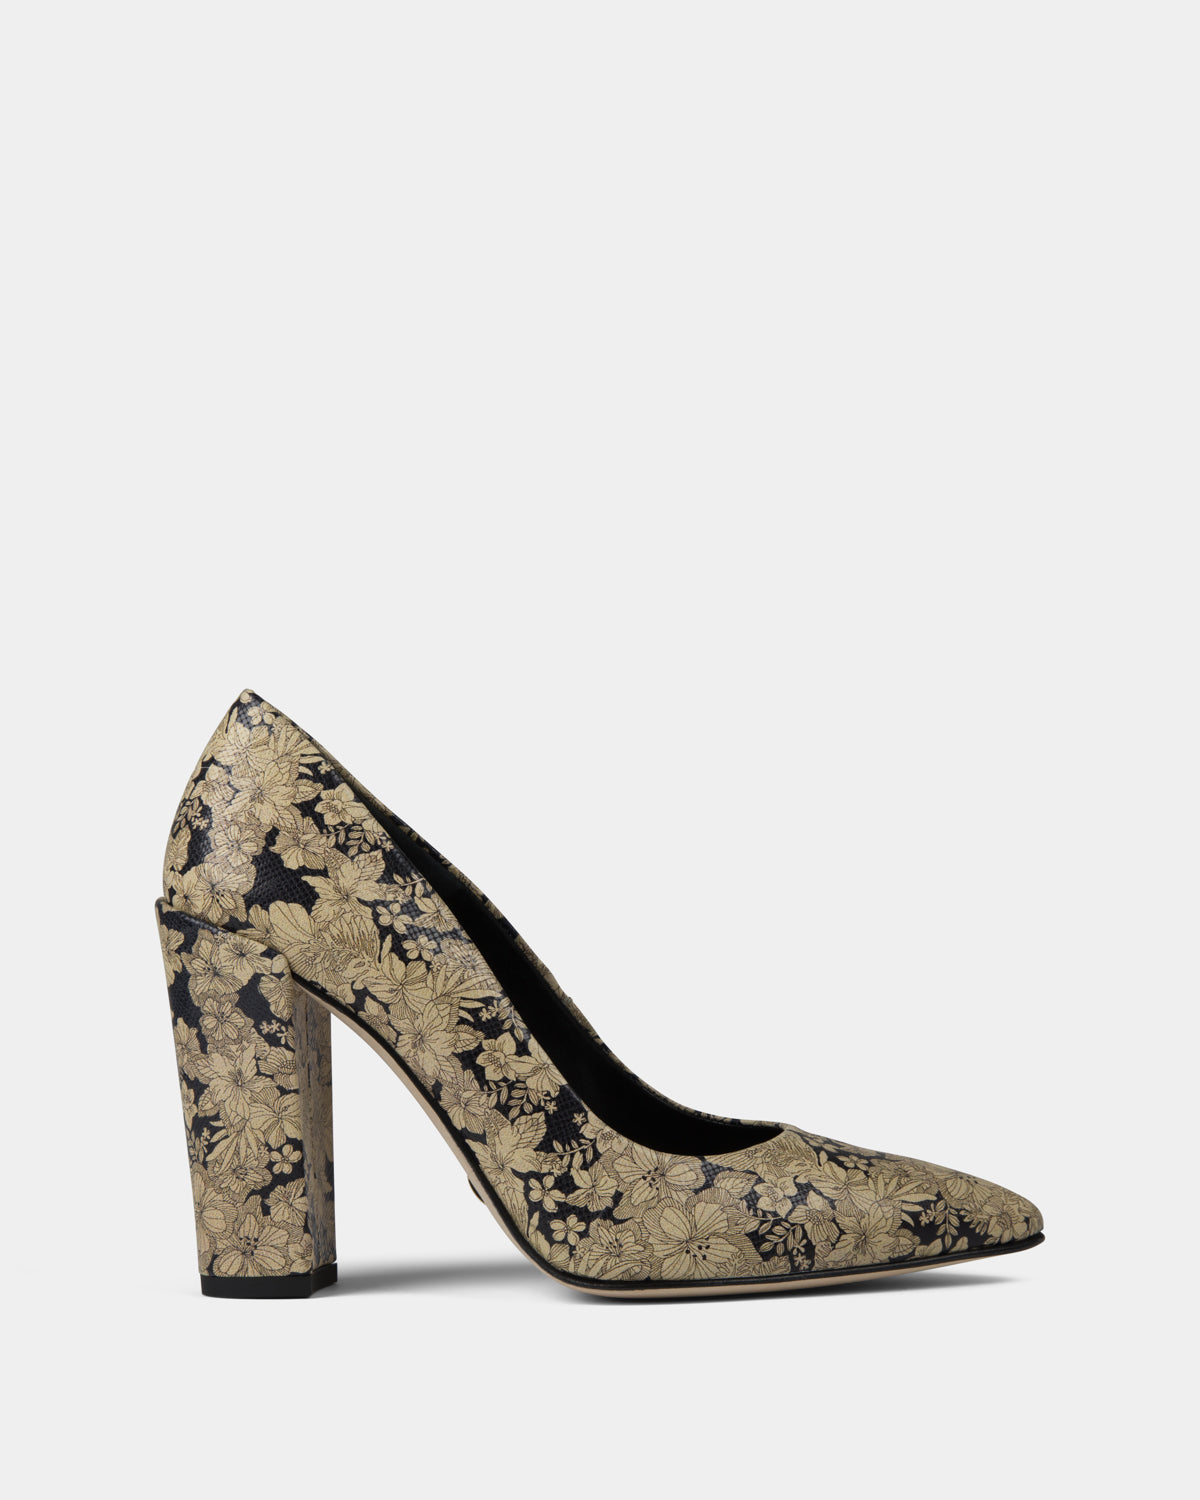 kallu-kallú-beige-flower-print-leather-shoes-for-women-made-in-spain-heels-shoes-high-heels-pums